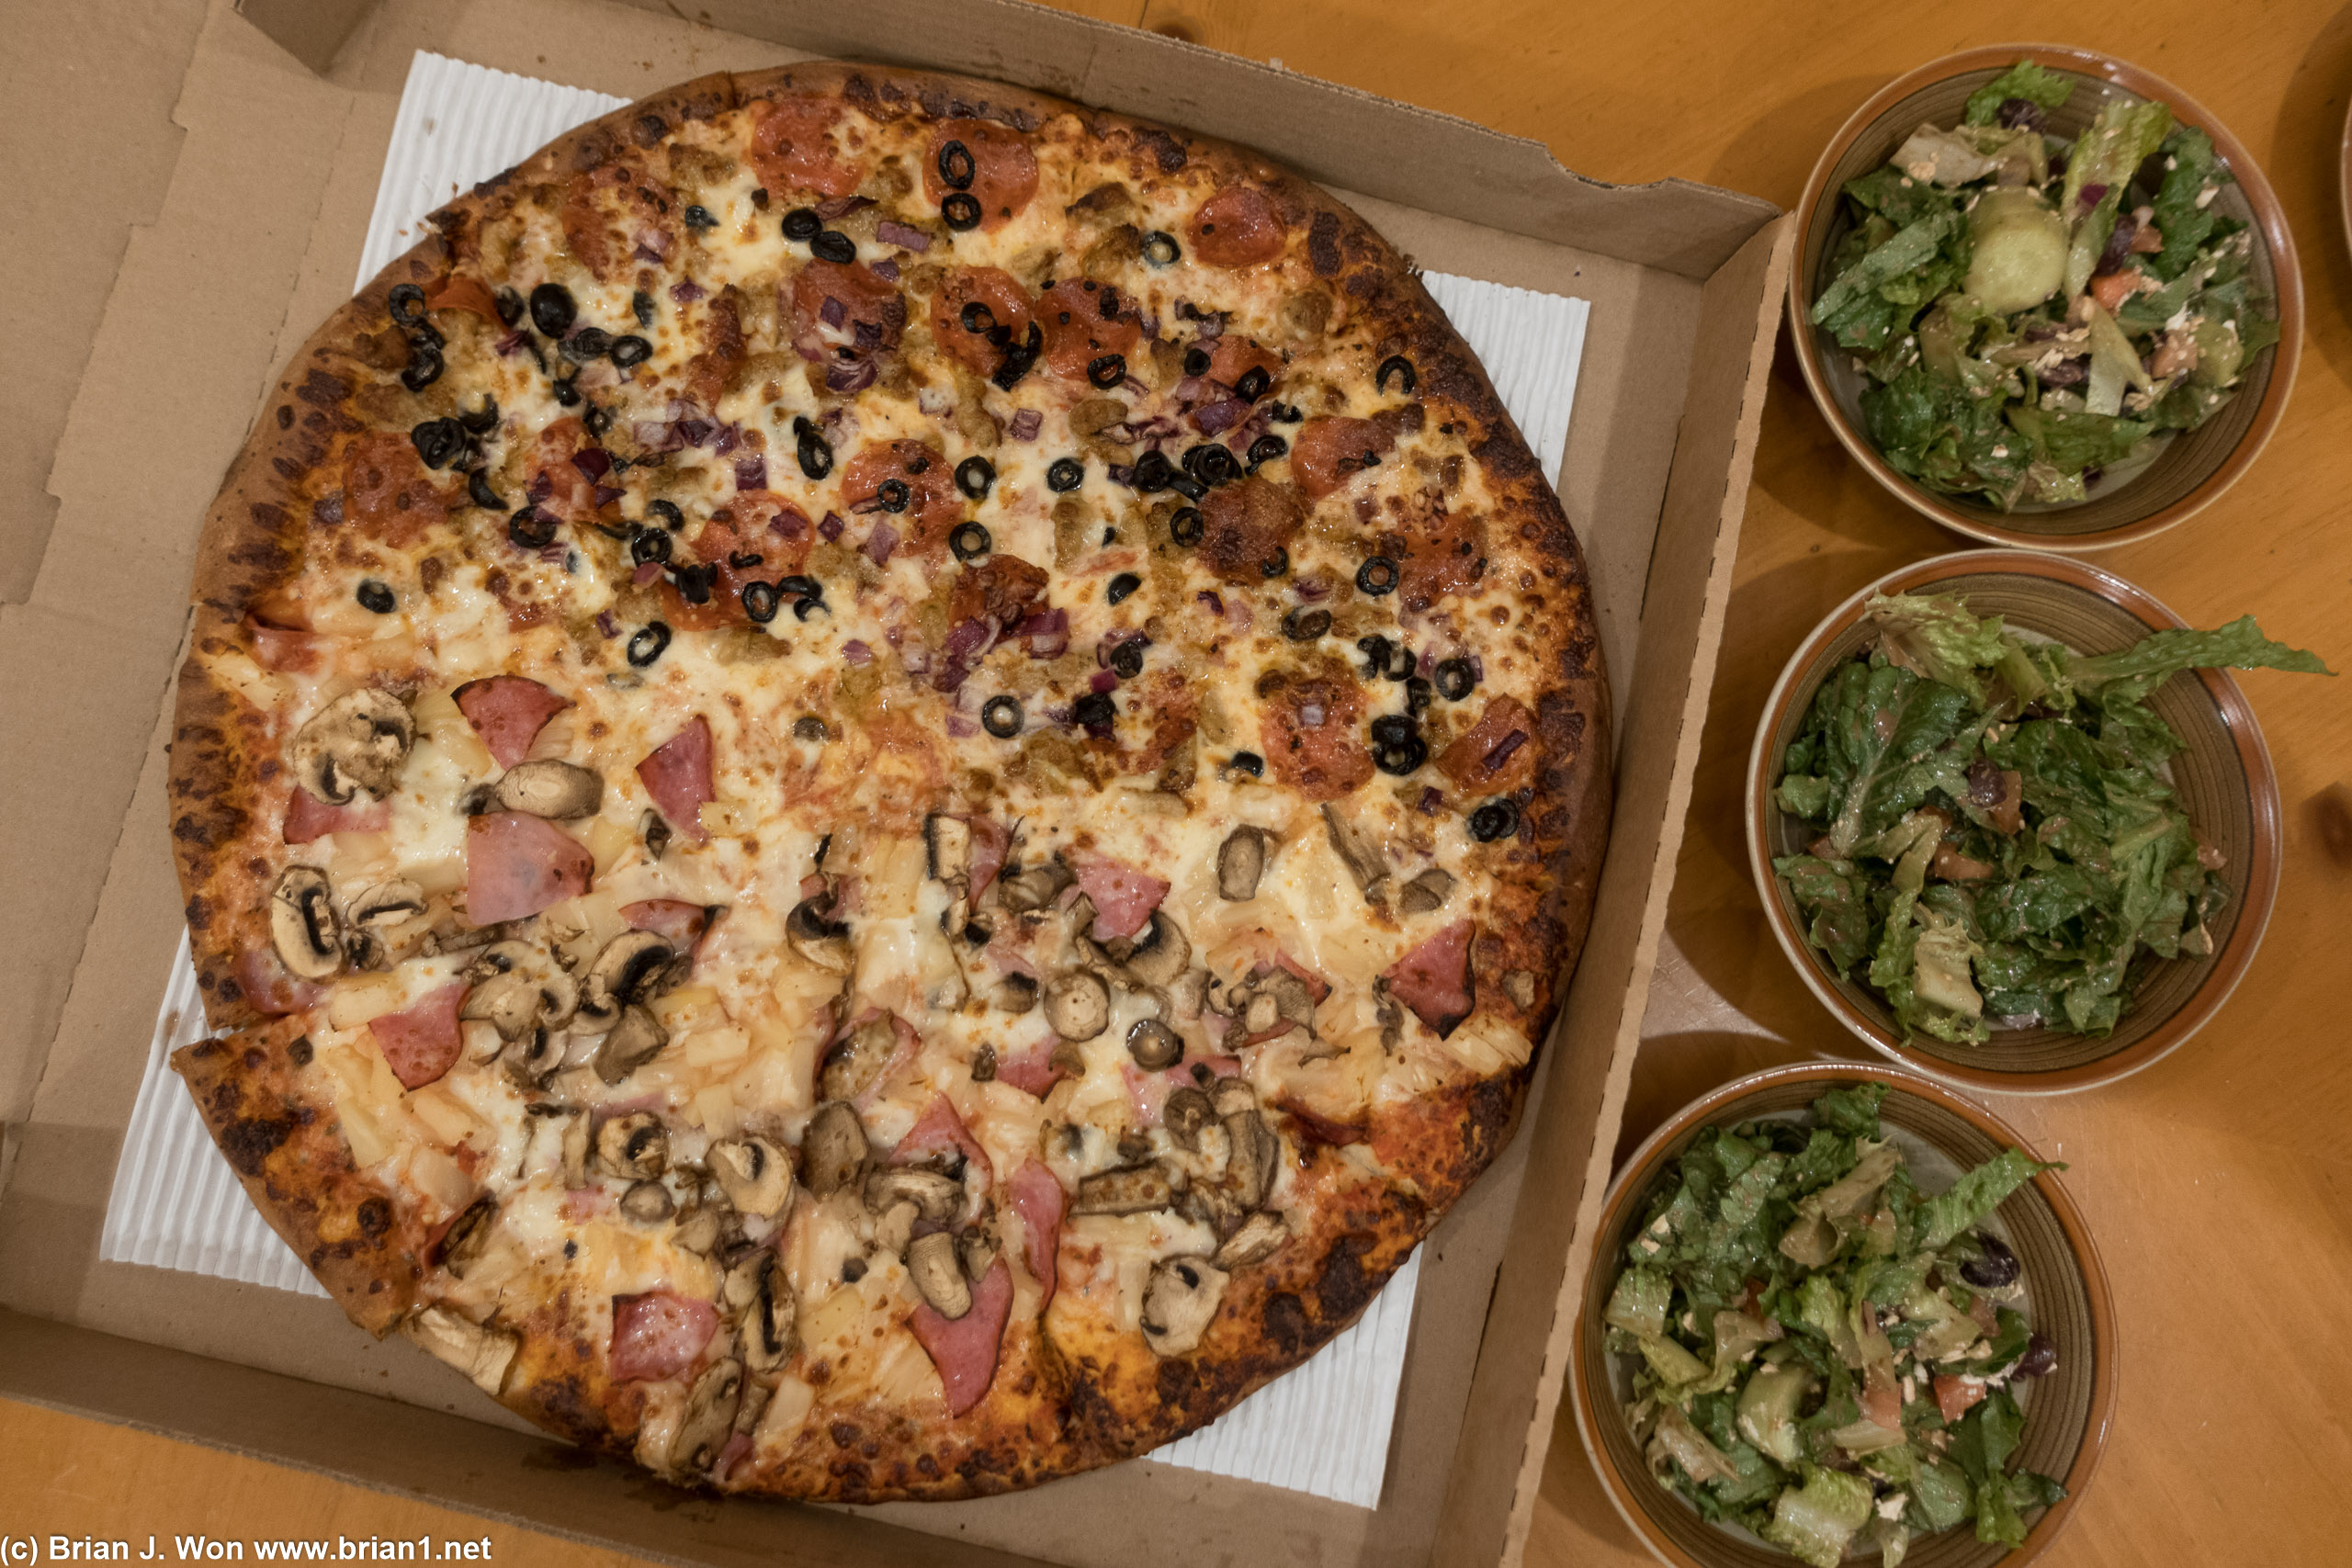 Lenzini's Pizza is okay. Utility. Greek salad was a good choice, needed veggies.